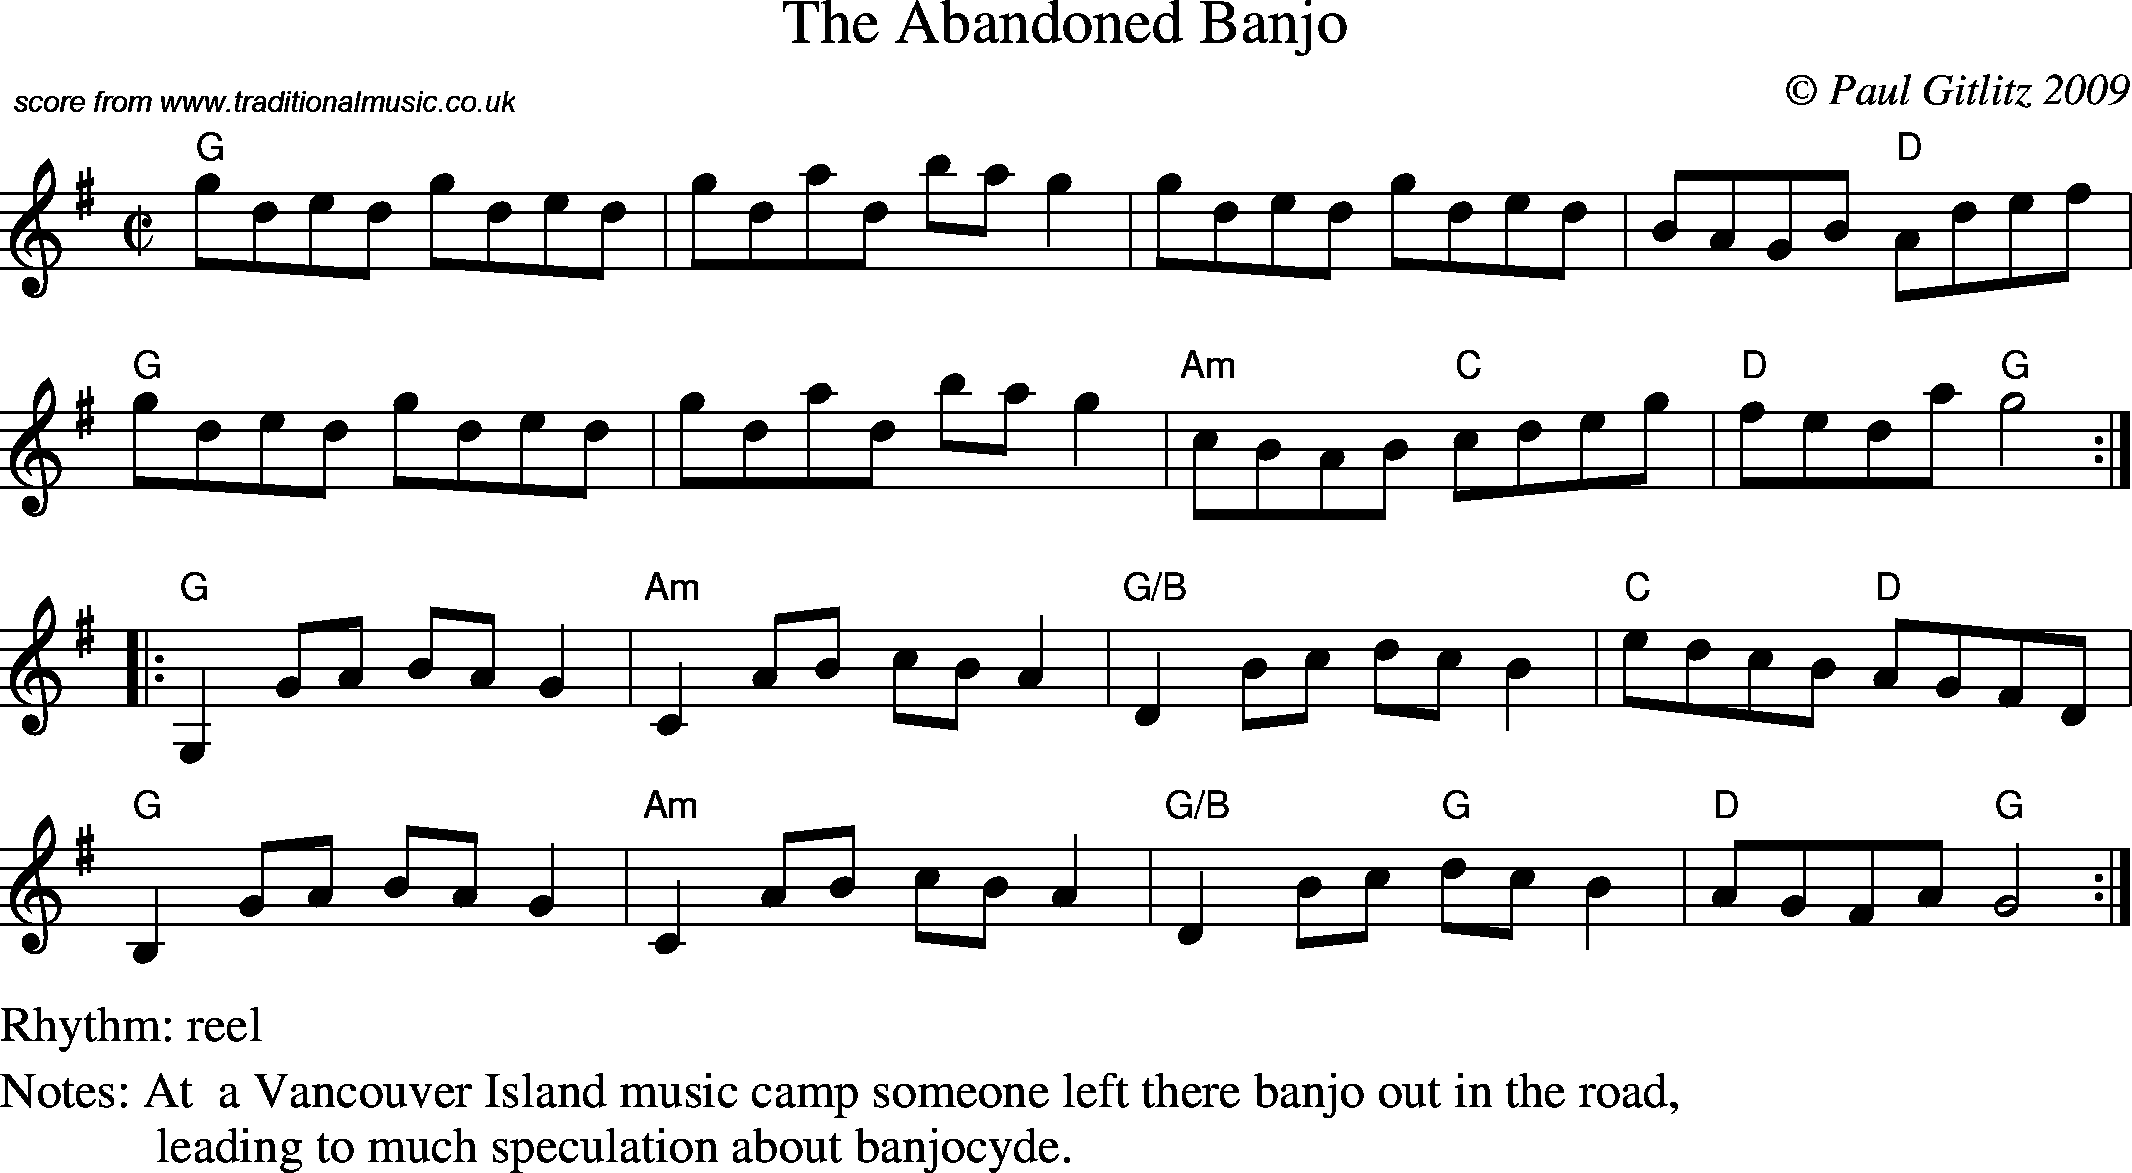 Sheet Music Score for Reel - Abandoned Banjo, The